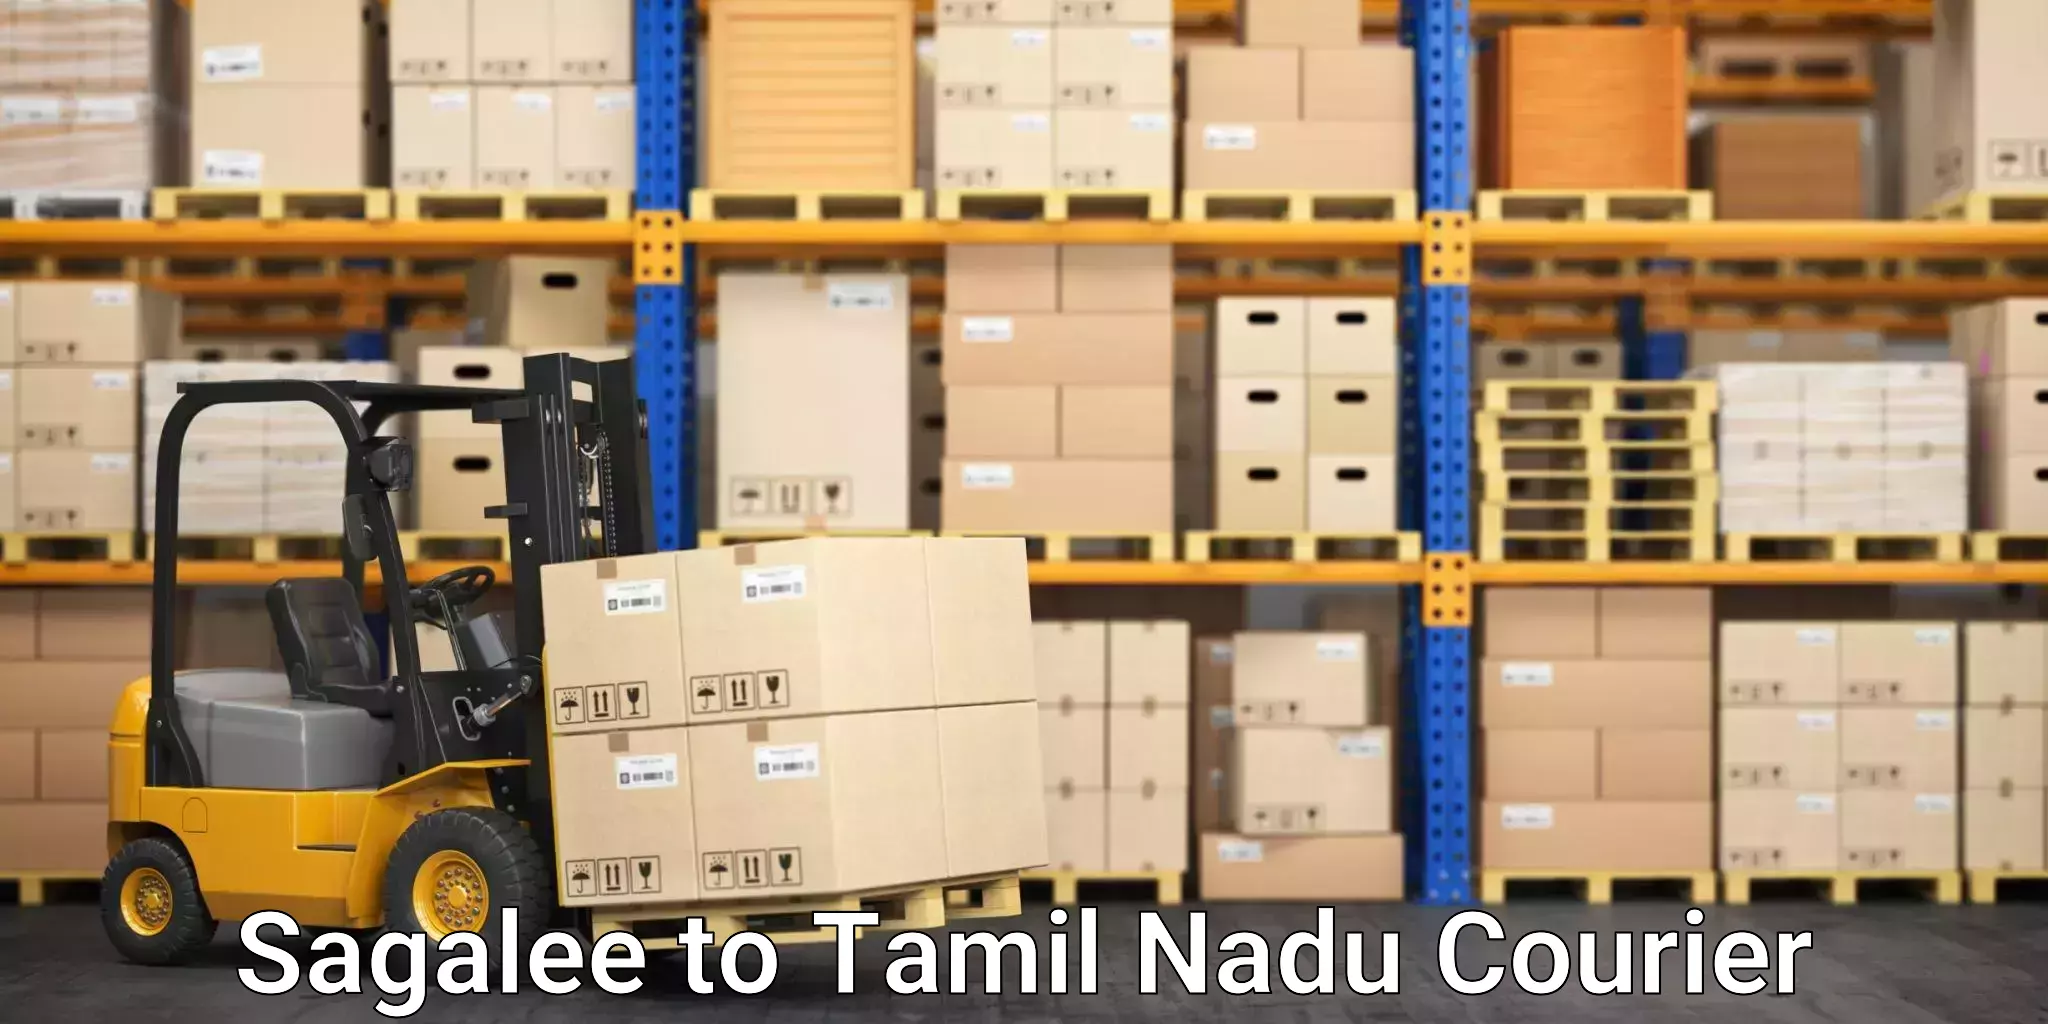 Courier service partnerships Sagalee to Tamil Nadu